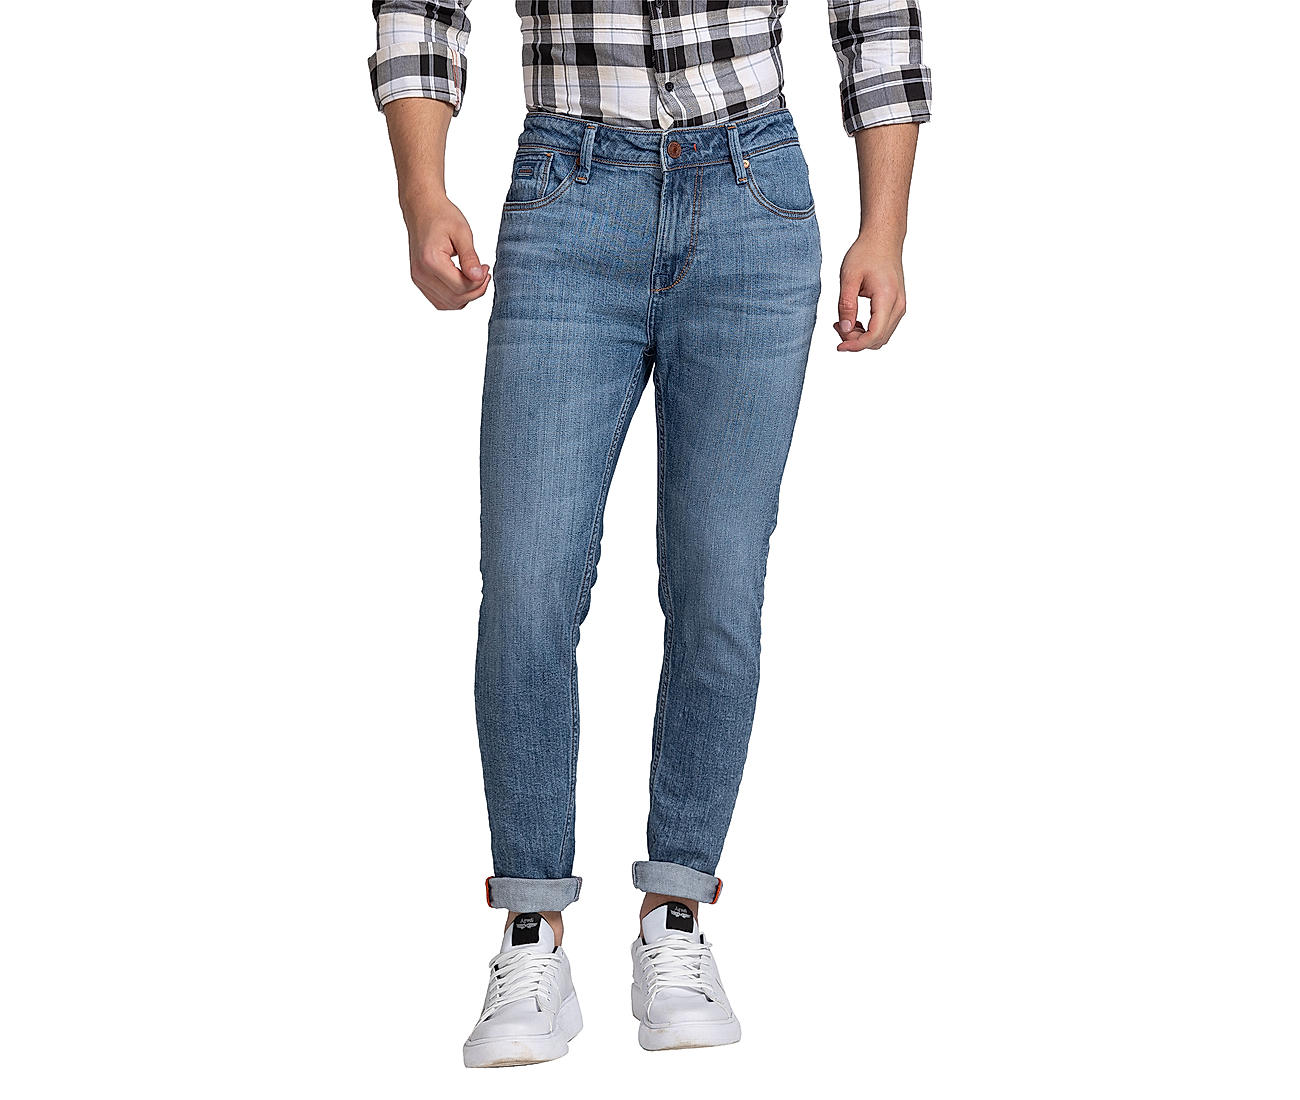 Buy Blue Solid Boot Cut Fit Jeans for Men Online at Killer Jeans